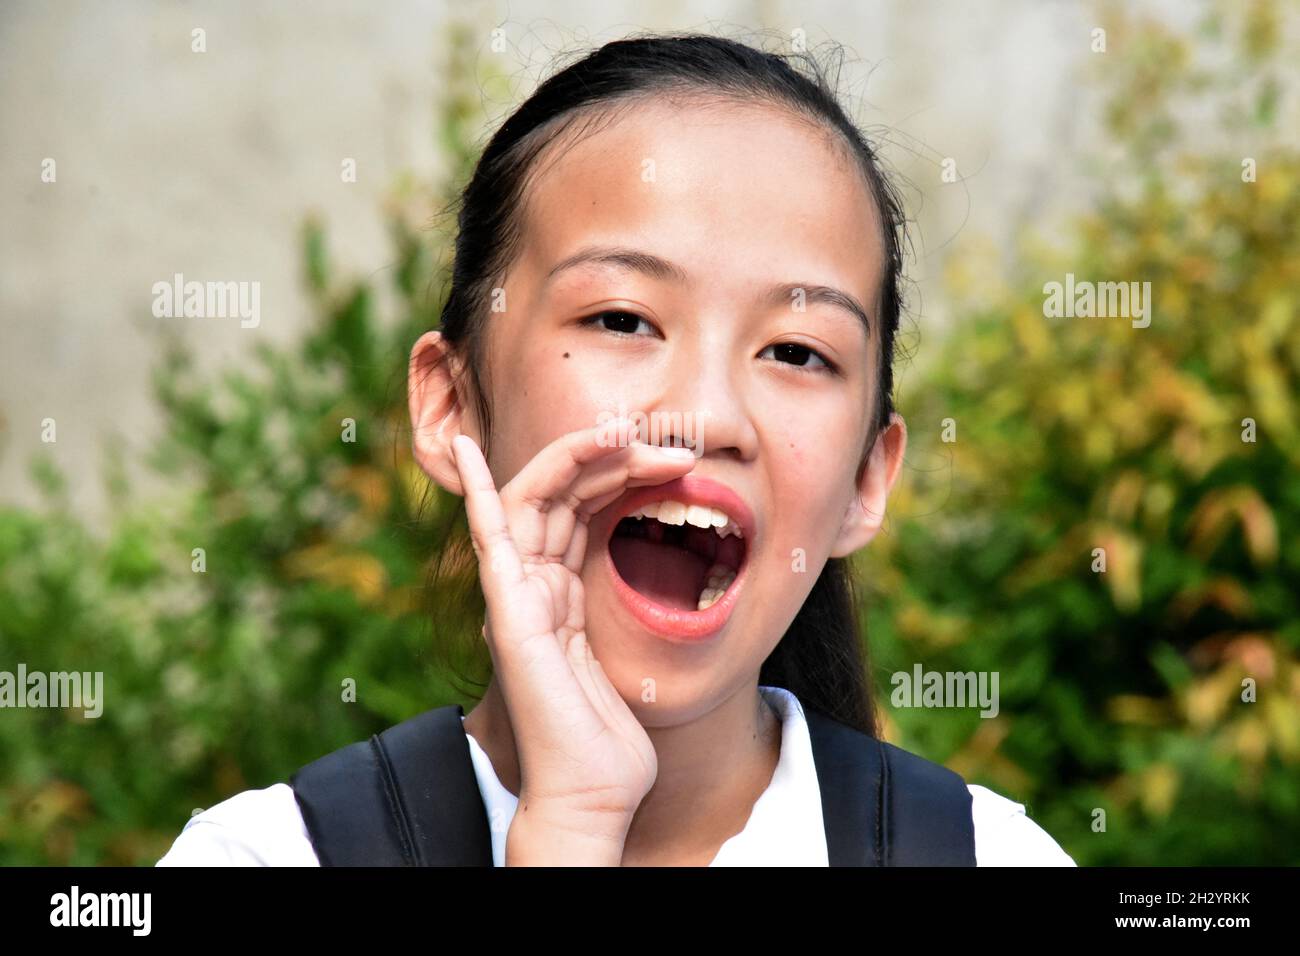 Student Teenager School Girl Yelling With School Books Stock Photo